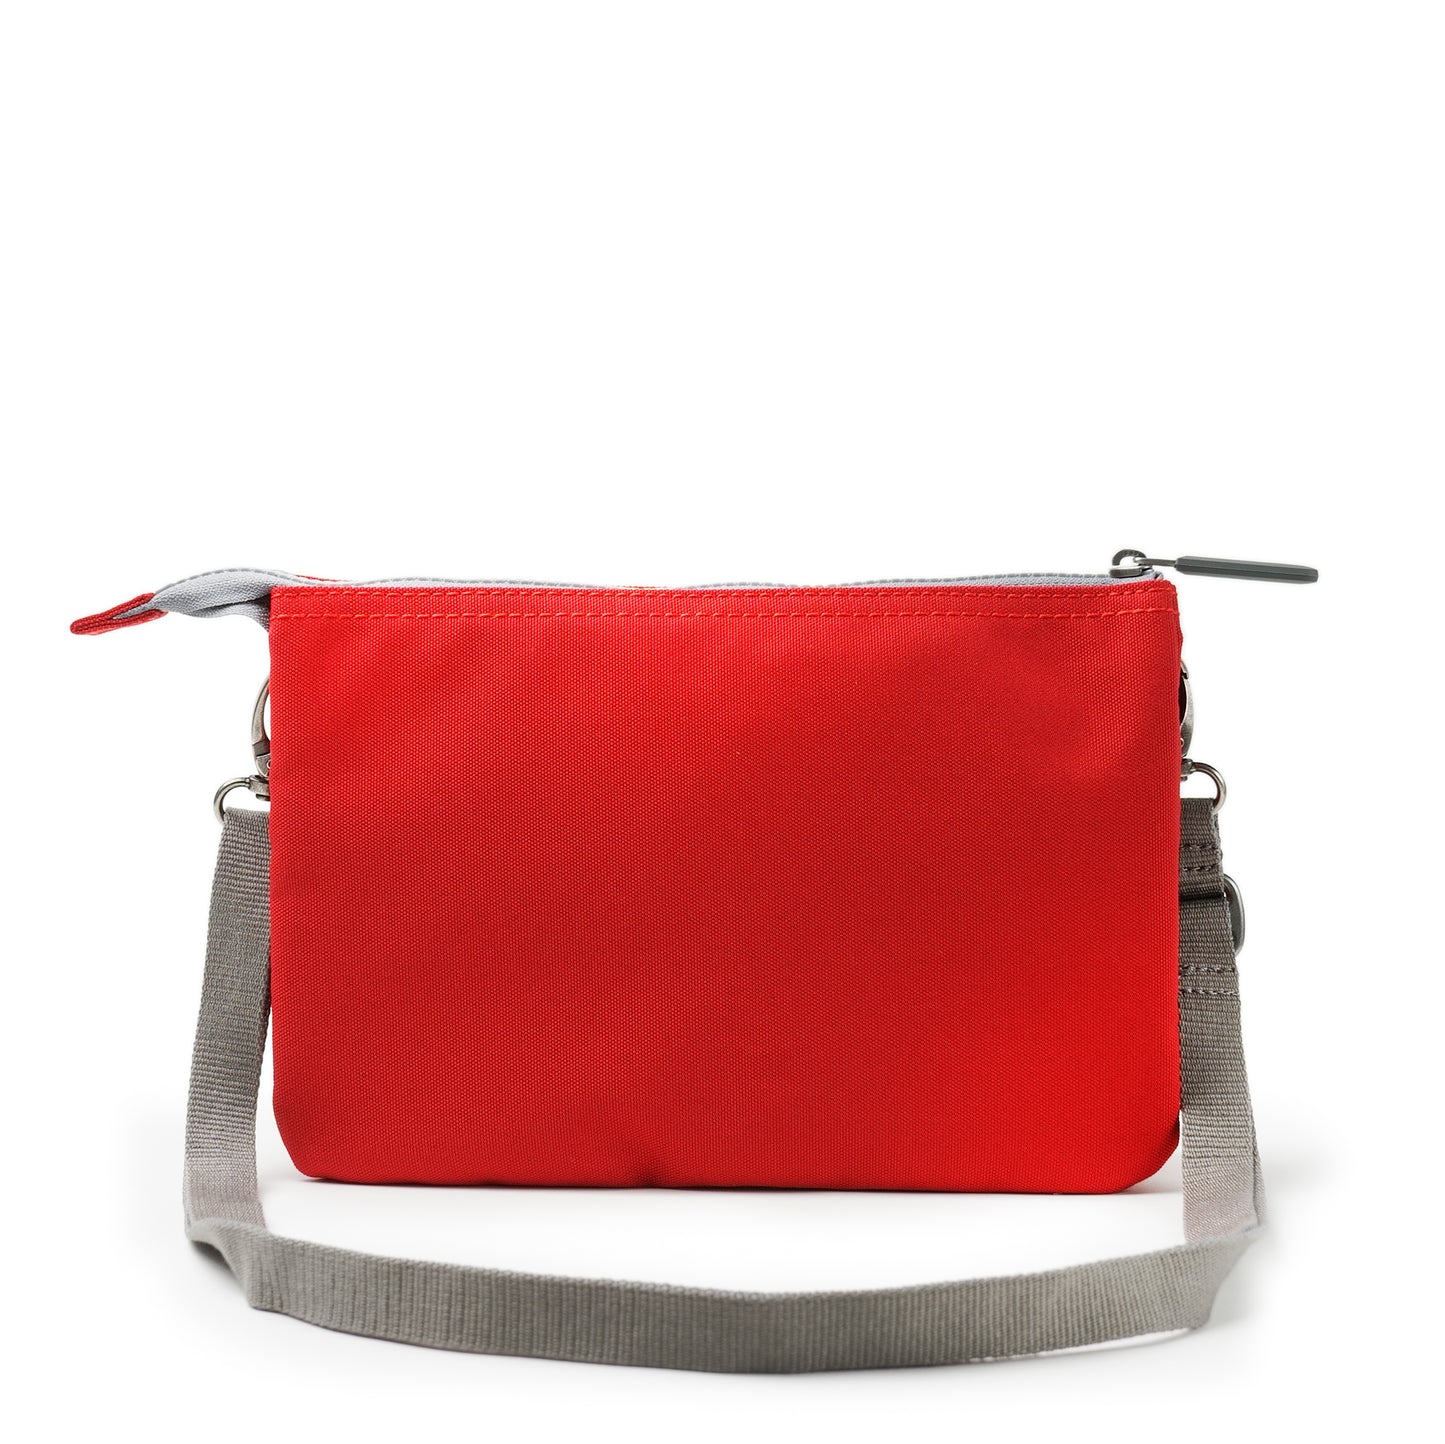 Roka London Carnaby Crossbody Bag, Mars Red (Sustainable Canvas)